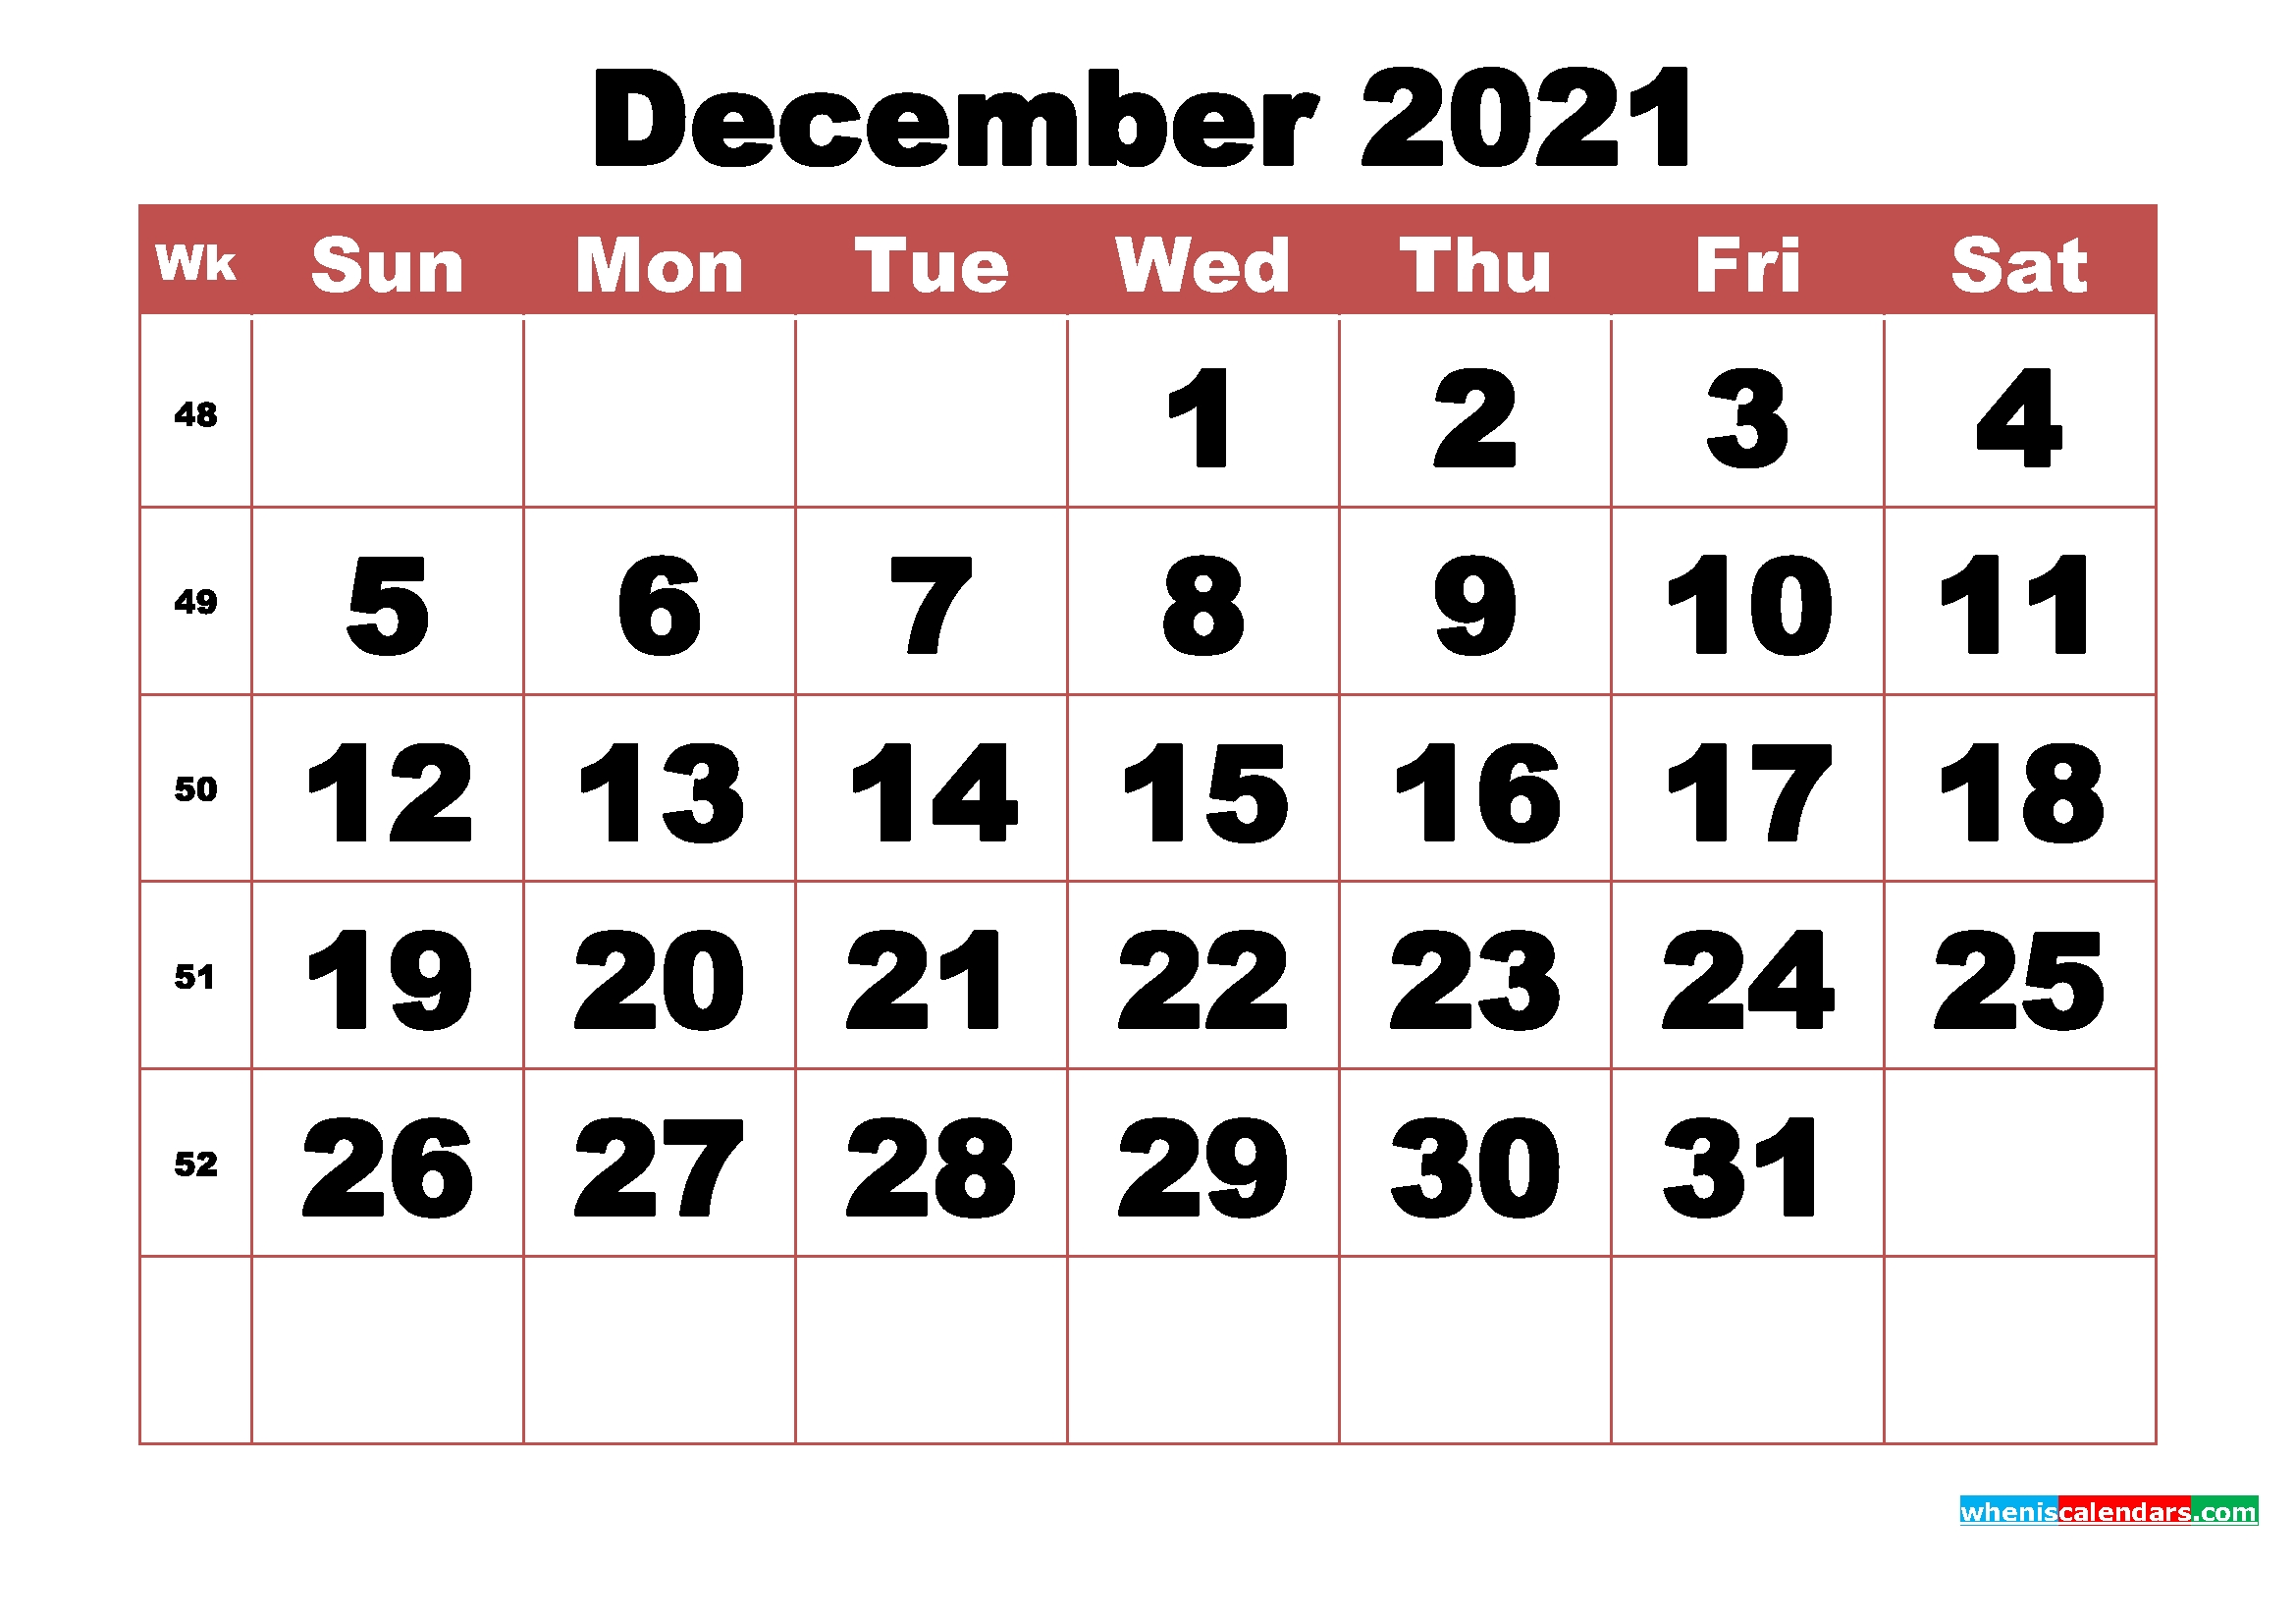 Free Printable December 2021 Calendar With Week Numbers - Free Printable 2020 Monthly Calendar December 2020 Through March 2021 Calendar